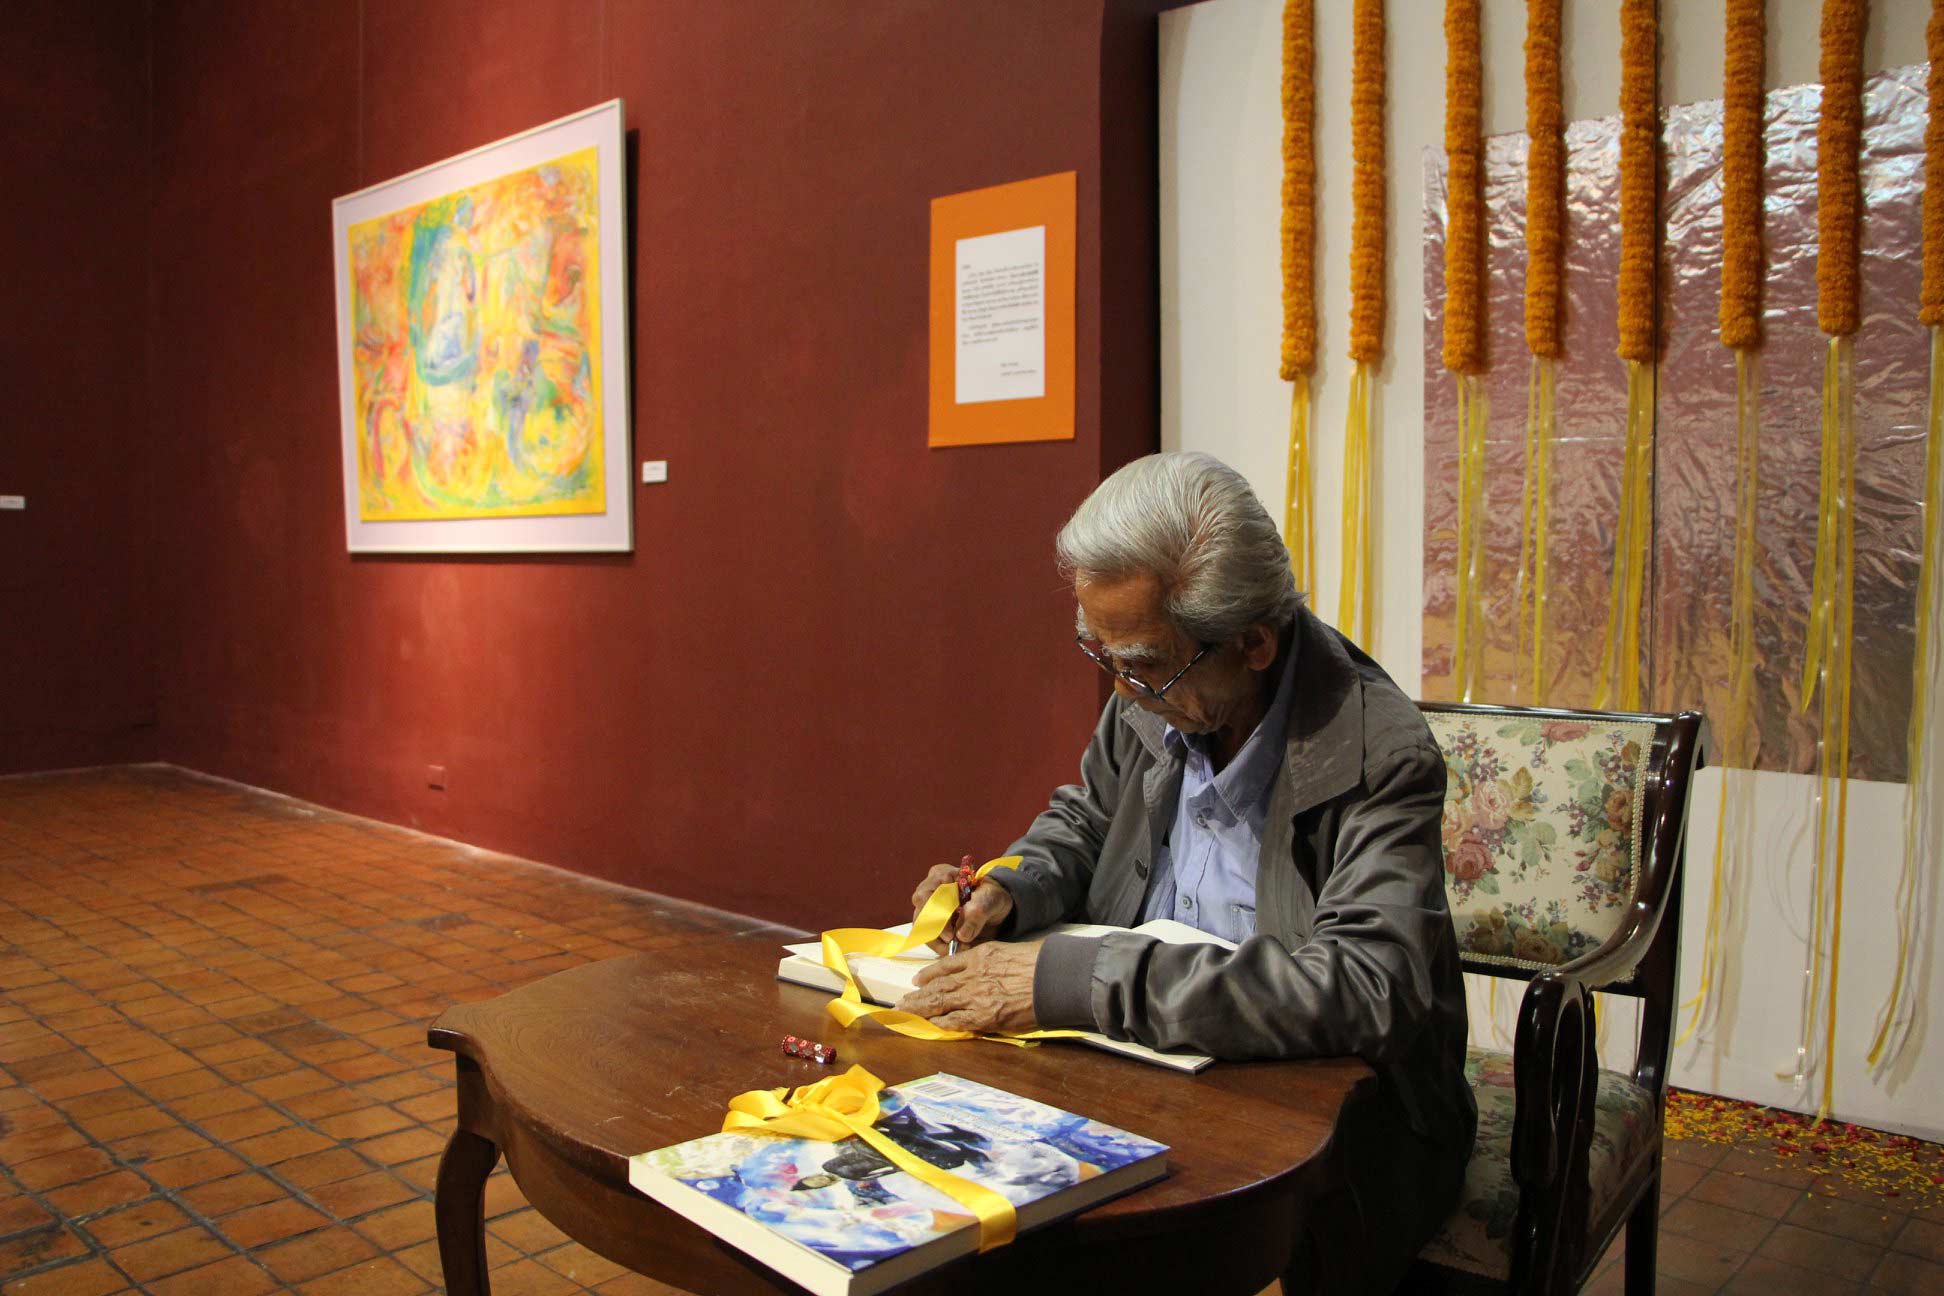 Exhibition Dan Kushala Dharma (The Land of Virtue) By Bhensine Nilavadhnananada | นิทรรศการ แดน กุสลา ธัมมา โดย เพ็ญสิน นีลวัฒนานนท์